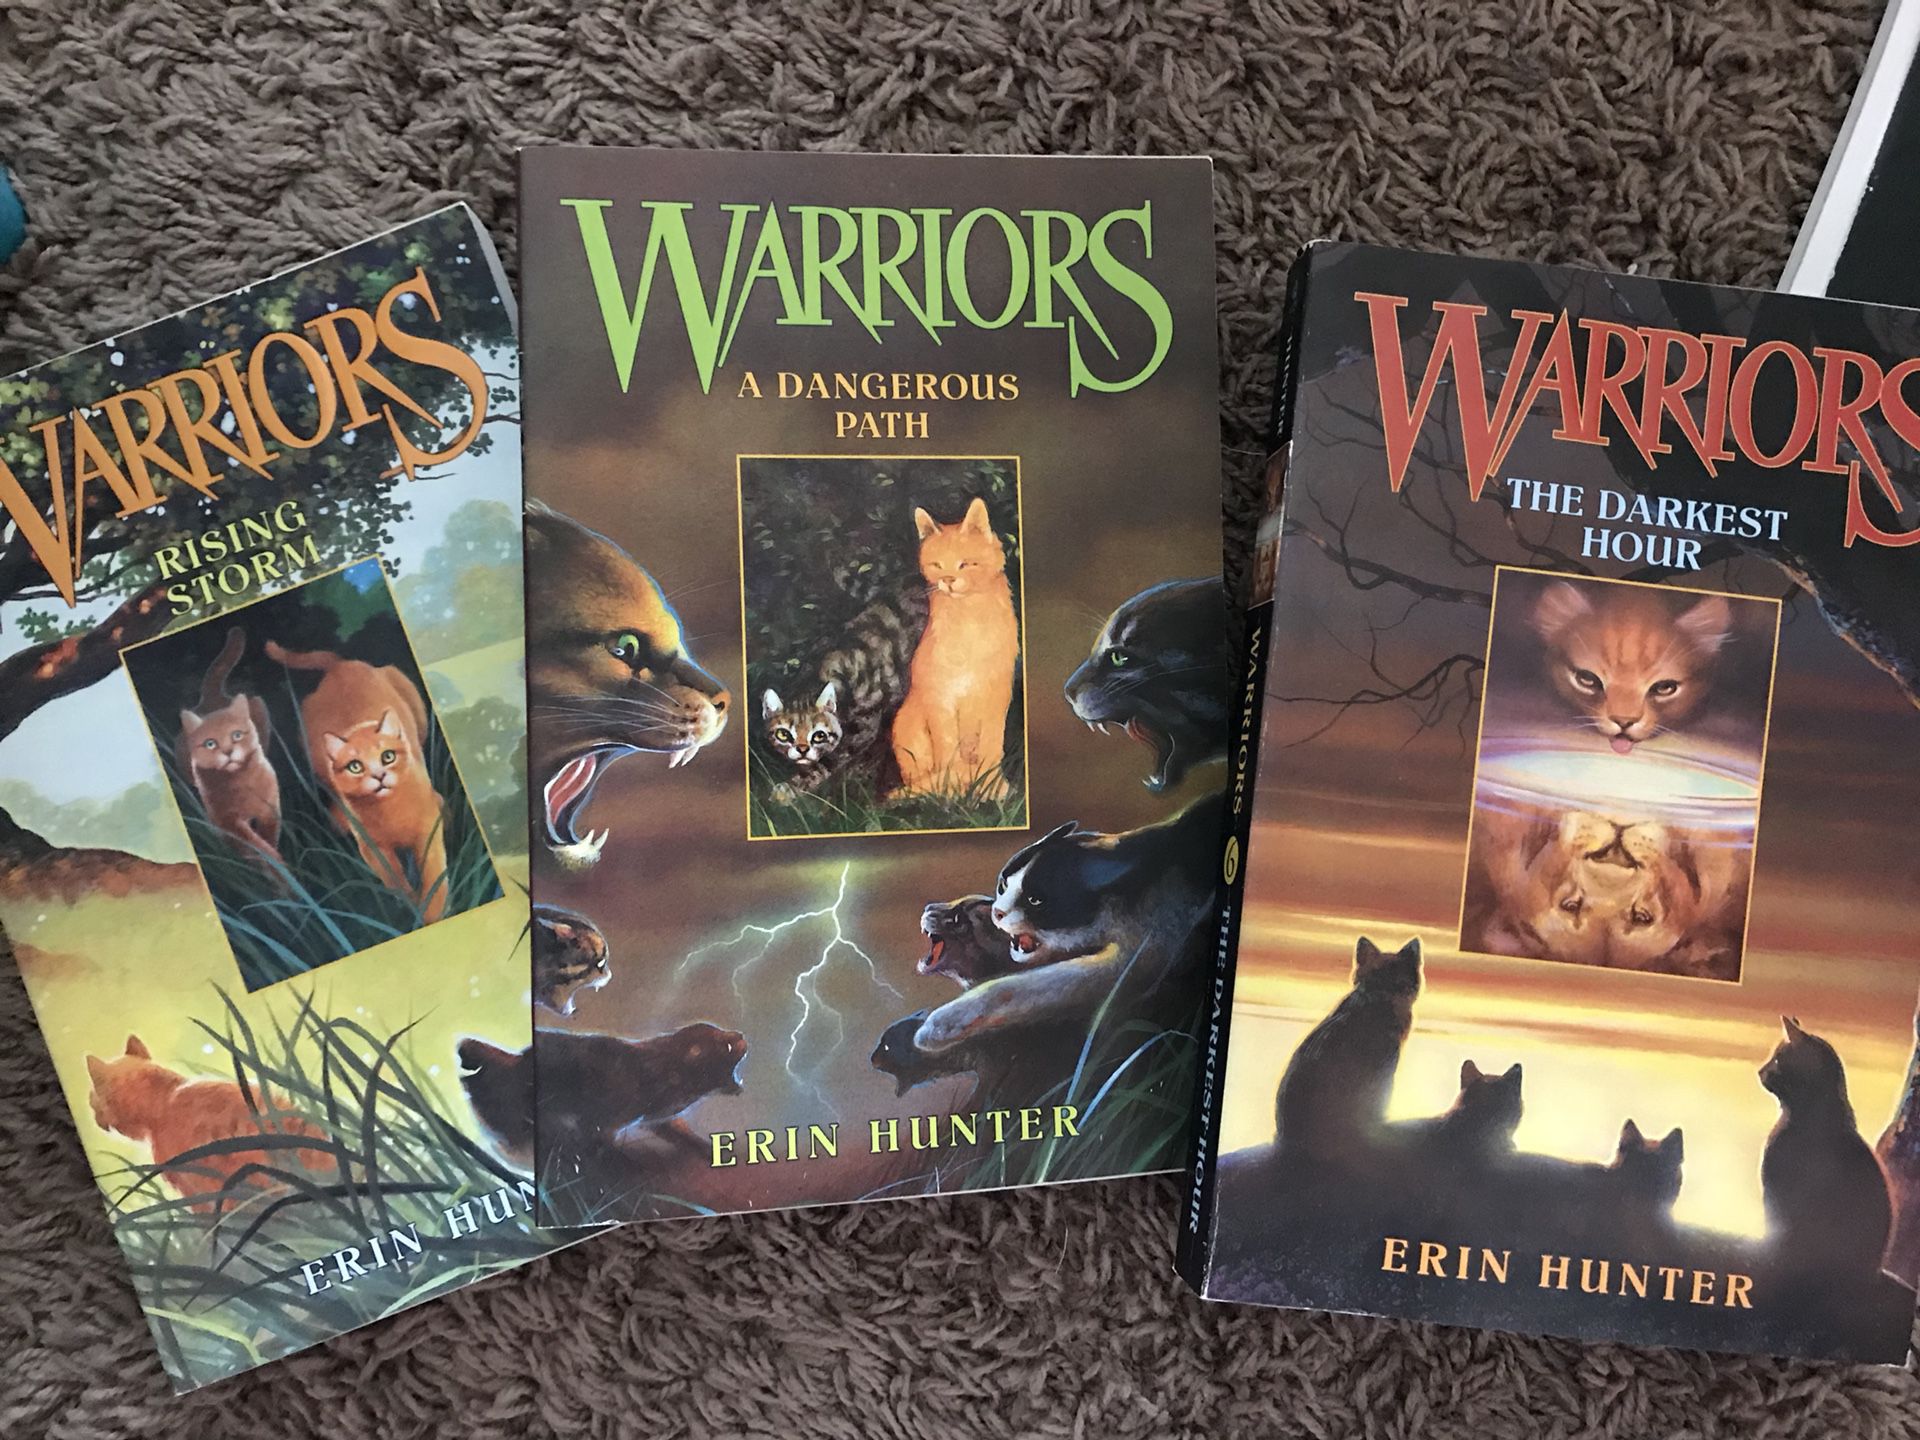 Warrior Cats books - Books - Port Orchard, Washington